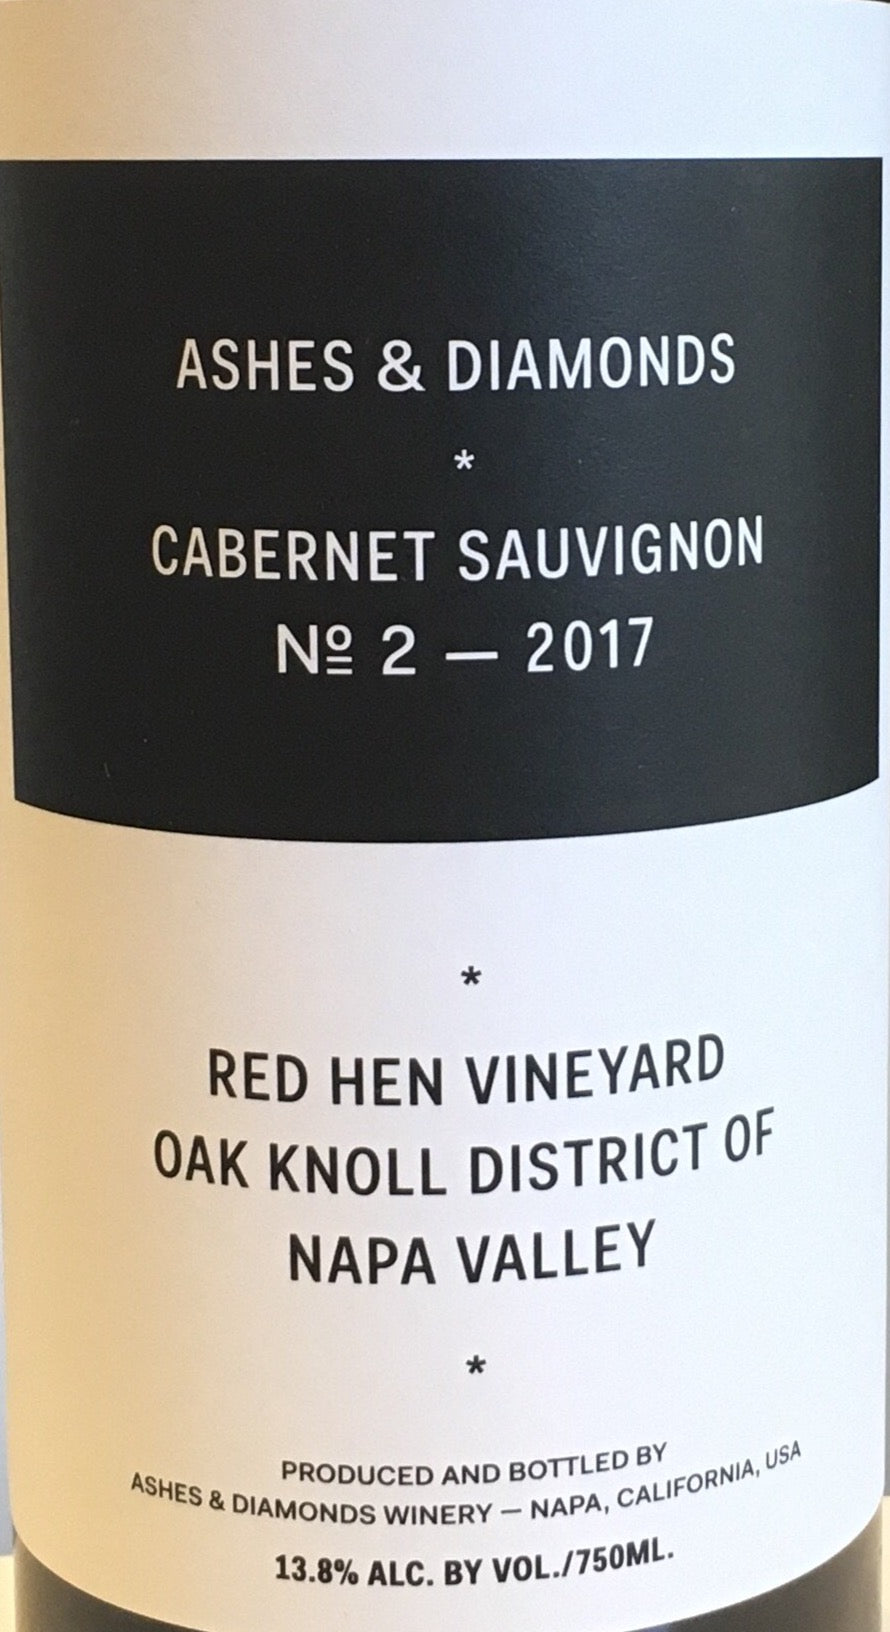 Ashes & Diamonds 'Red Hen Vineyard' - Cabernet Sauvignon No 2